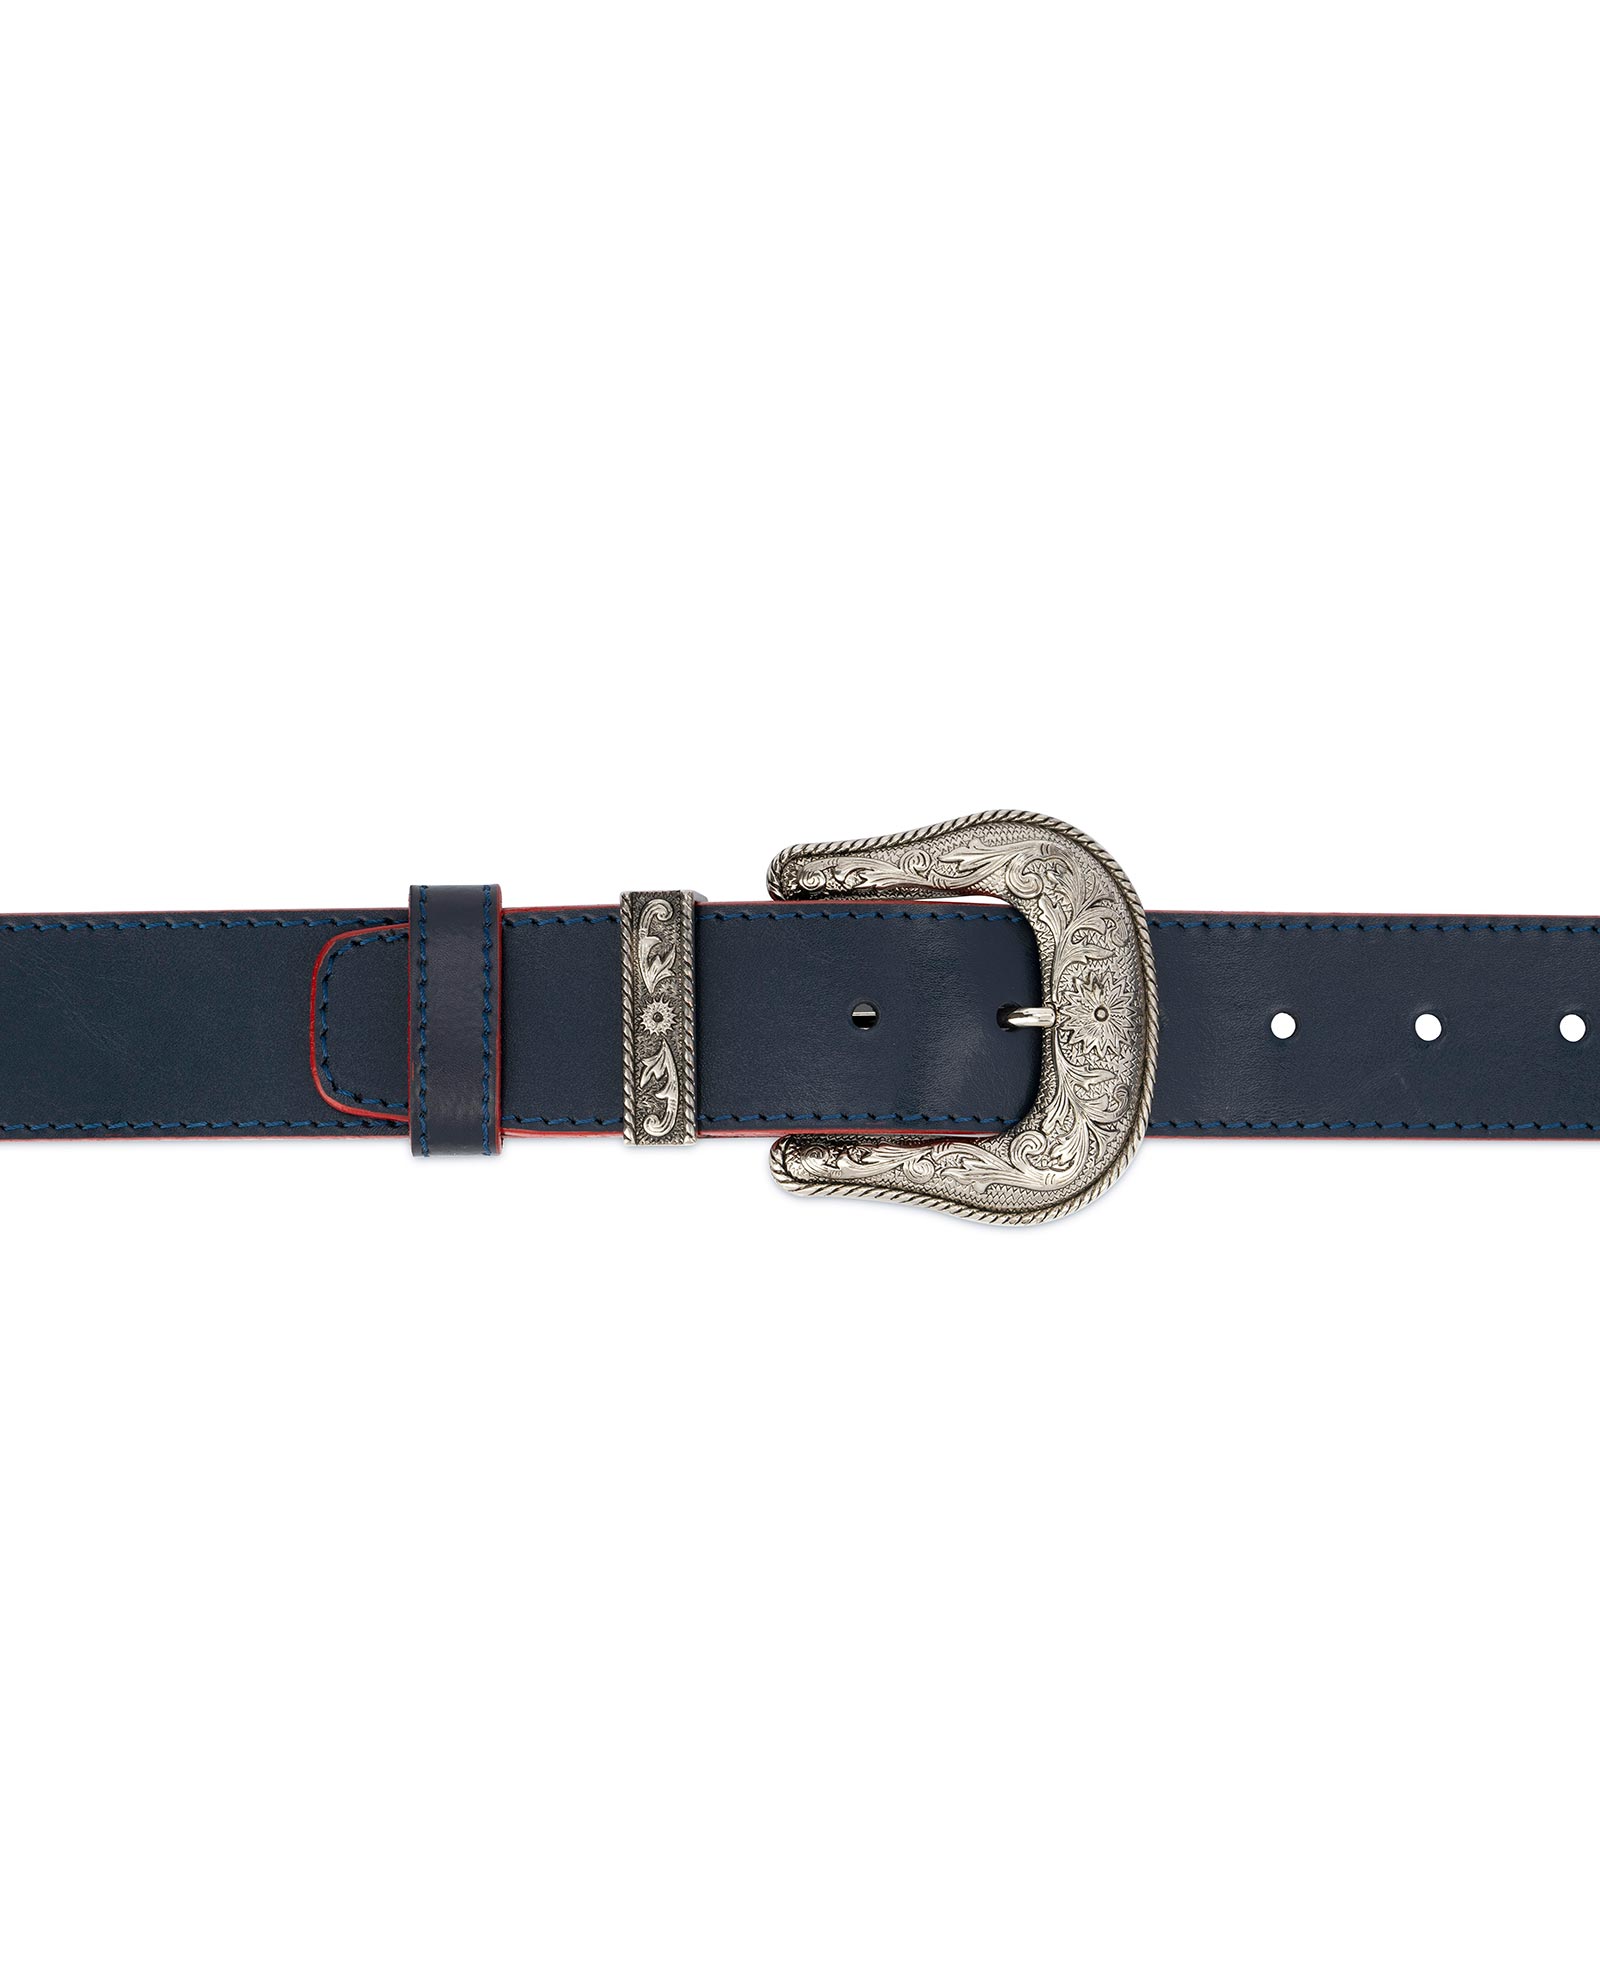 Buy Cowboy Western Belt | Dark Blue Leather | LeatherBeltsOnline.com